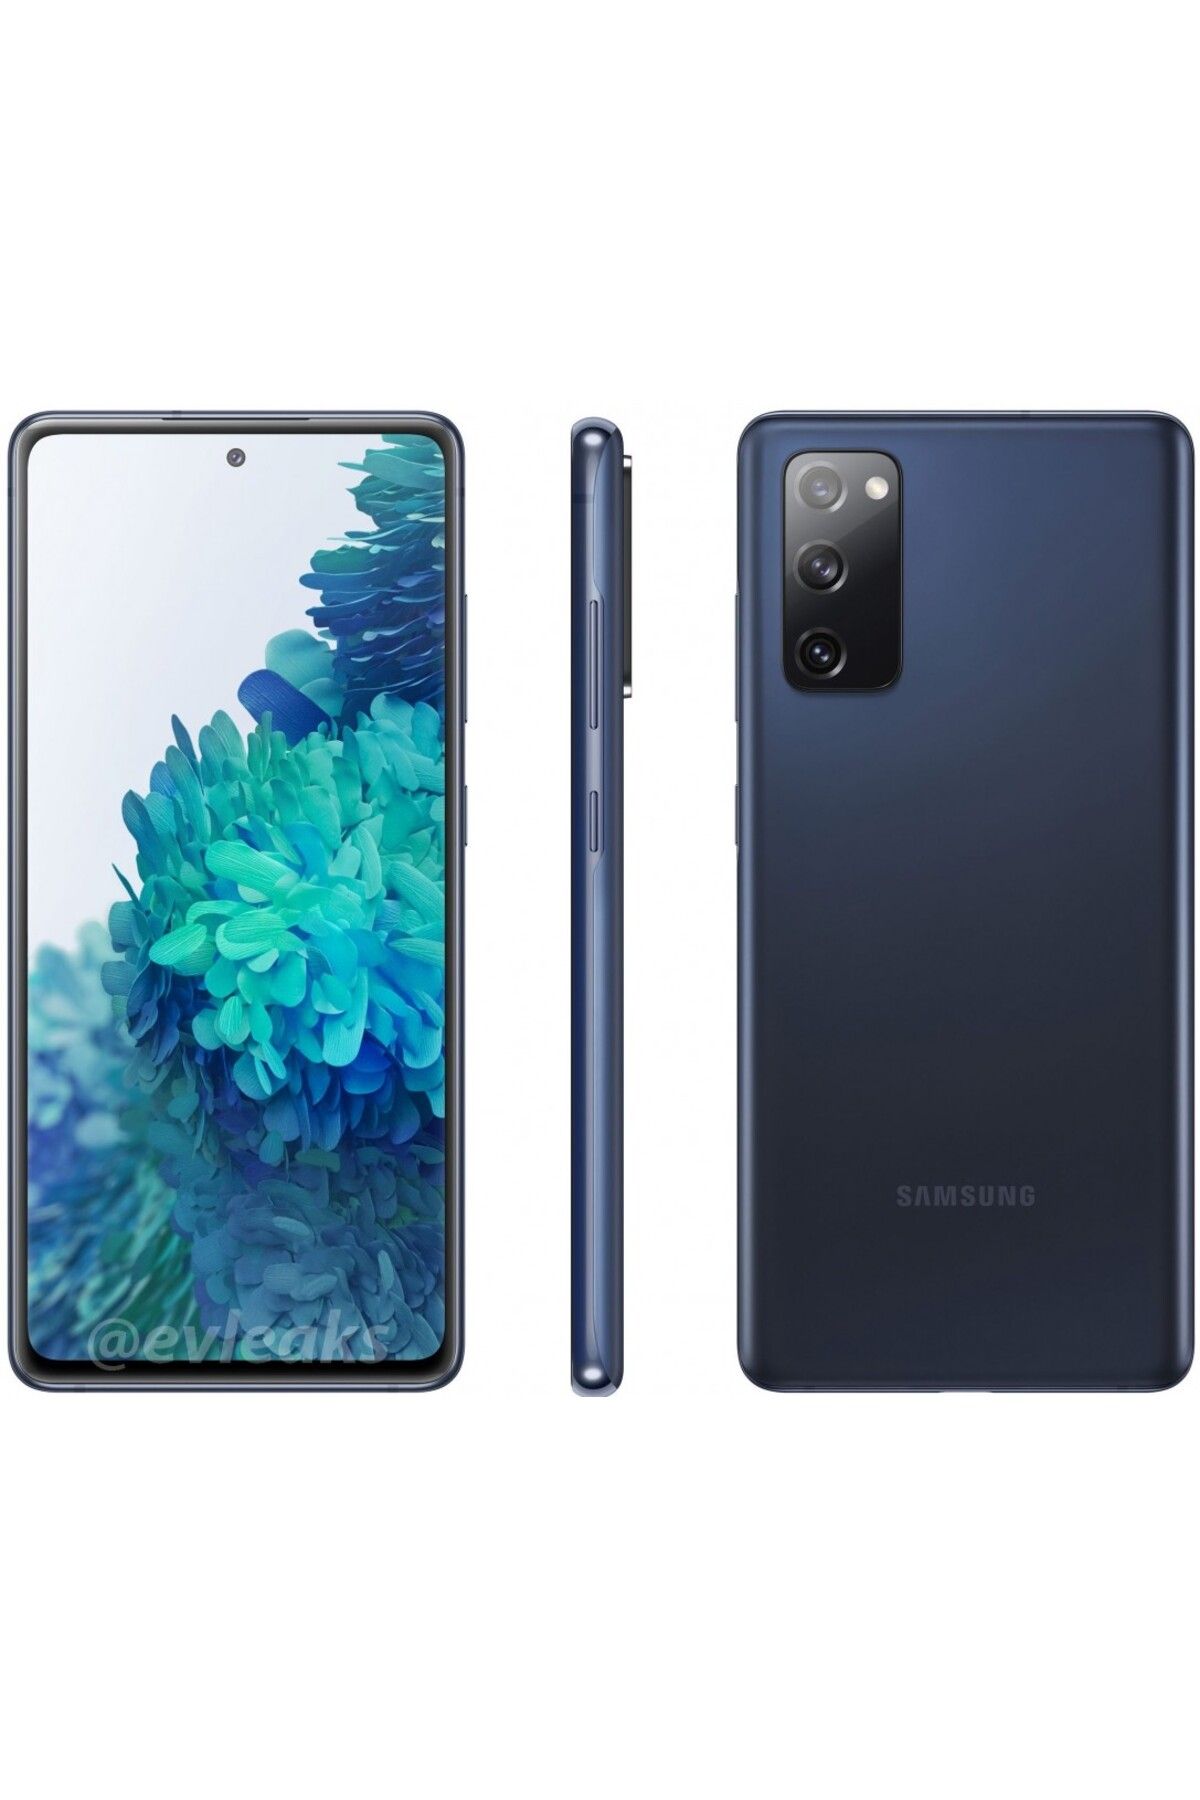 Samsung Yenilenmiş Samsung Galaxy S20 FE 128GB Mavi A Kalite